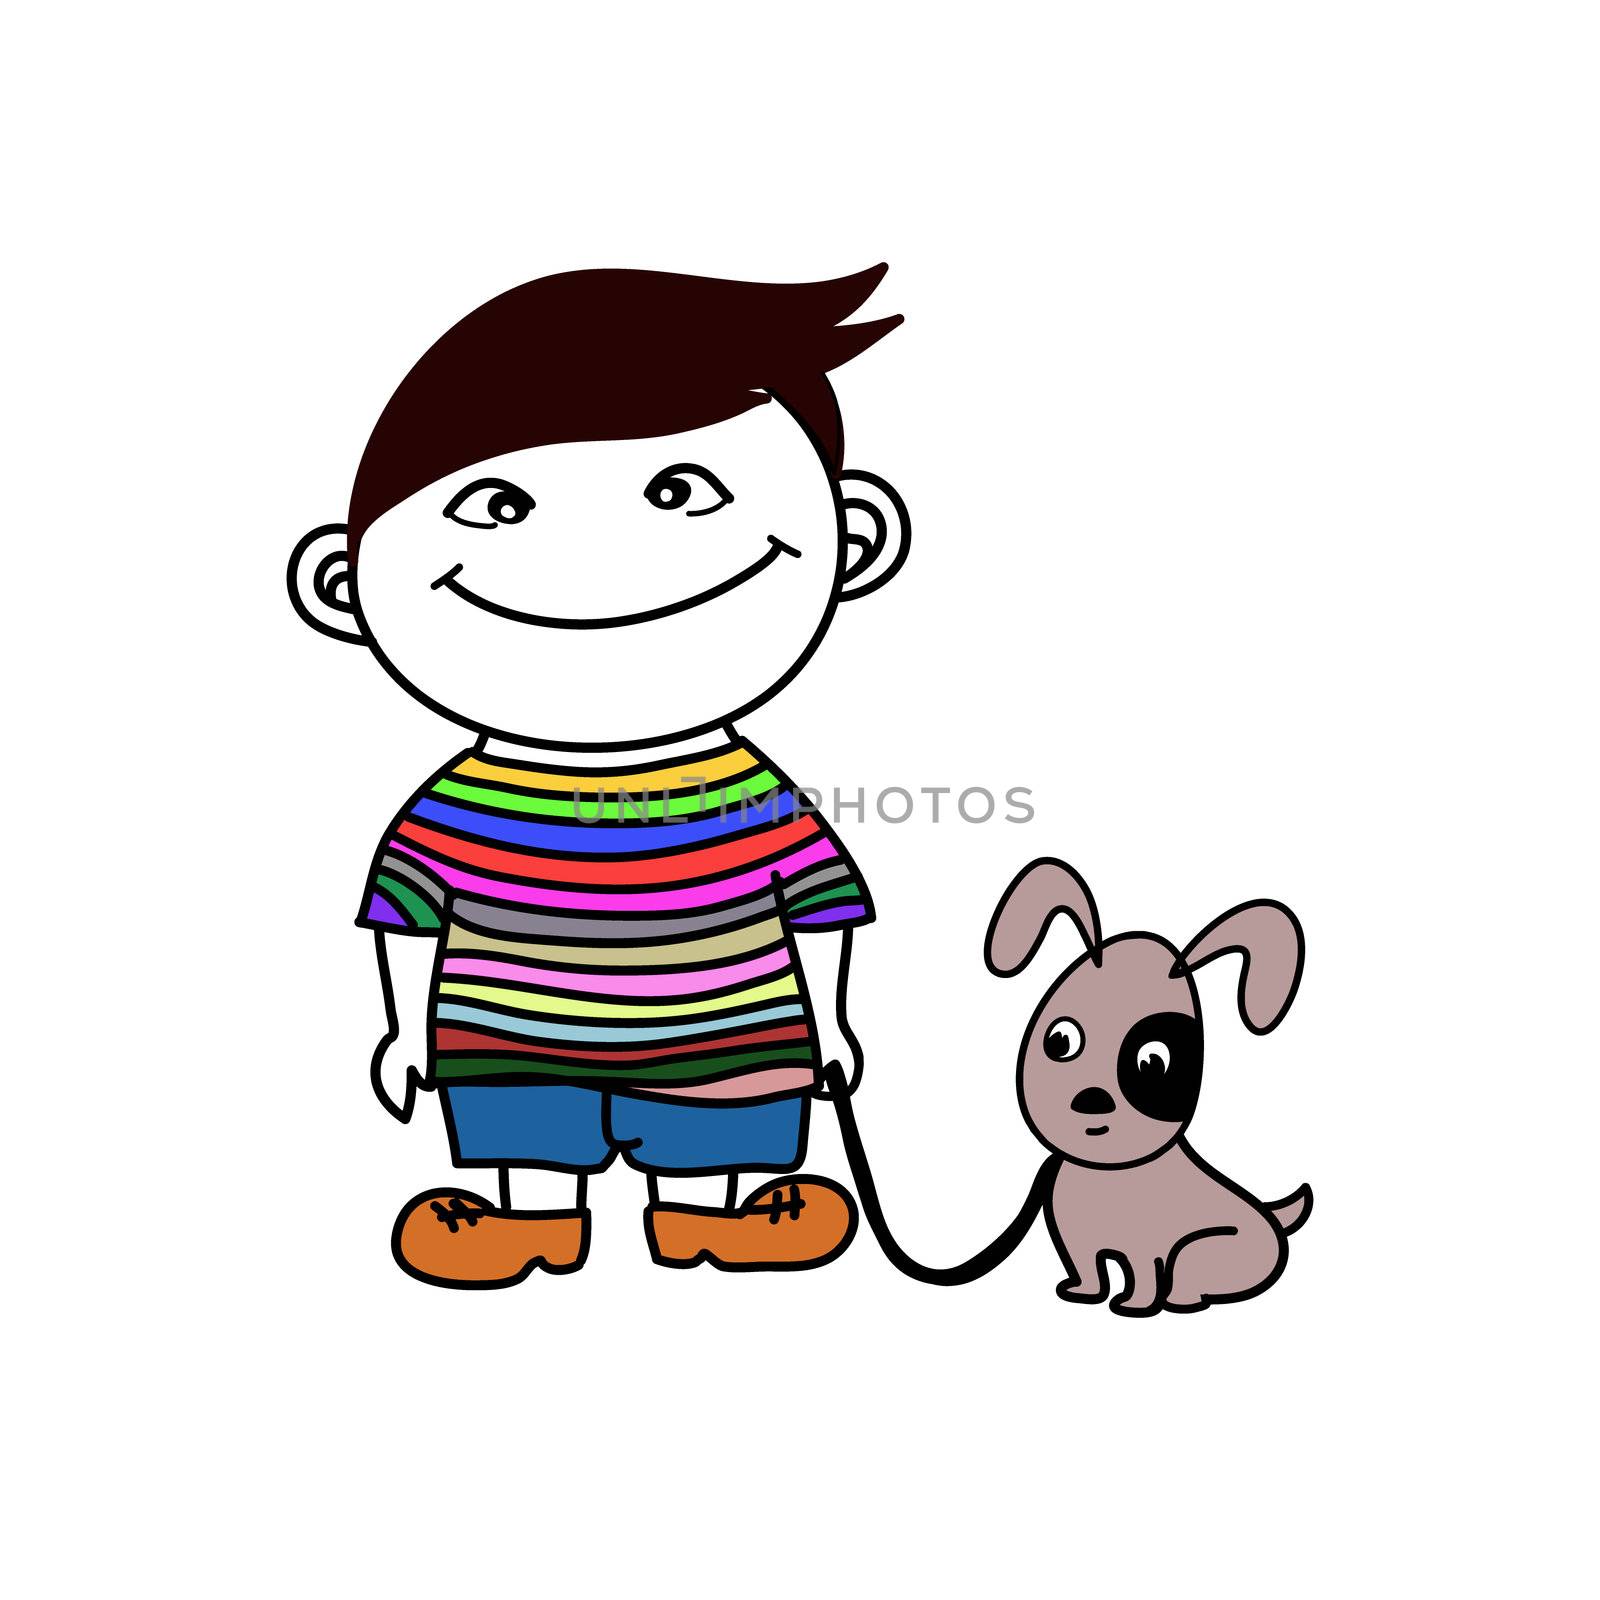 Boy with Dog friend by jukurae